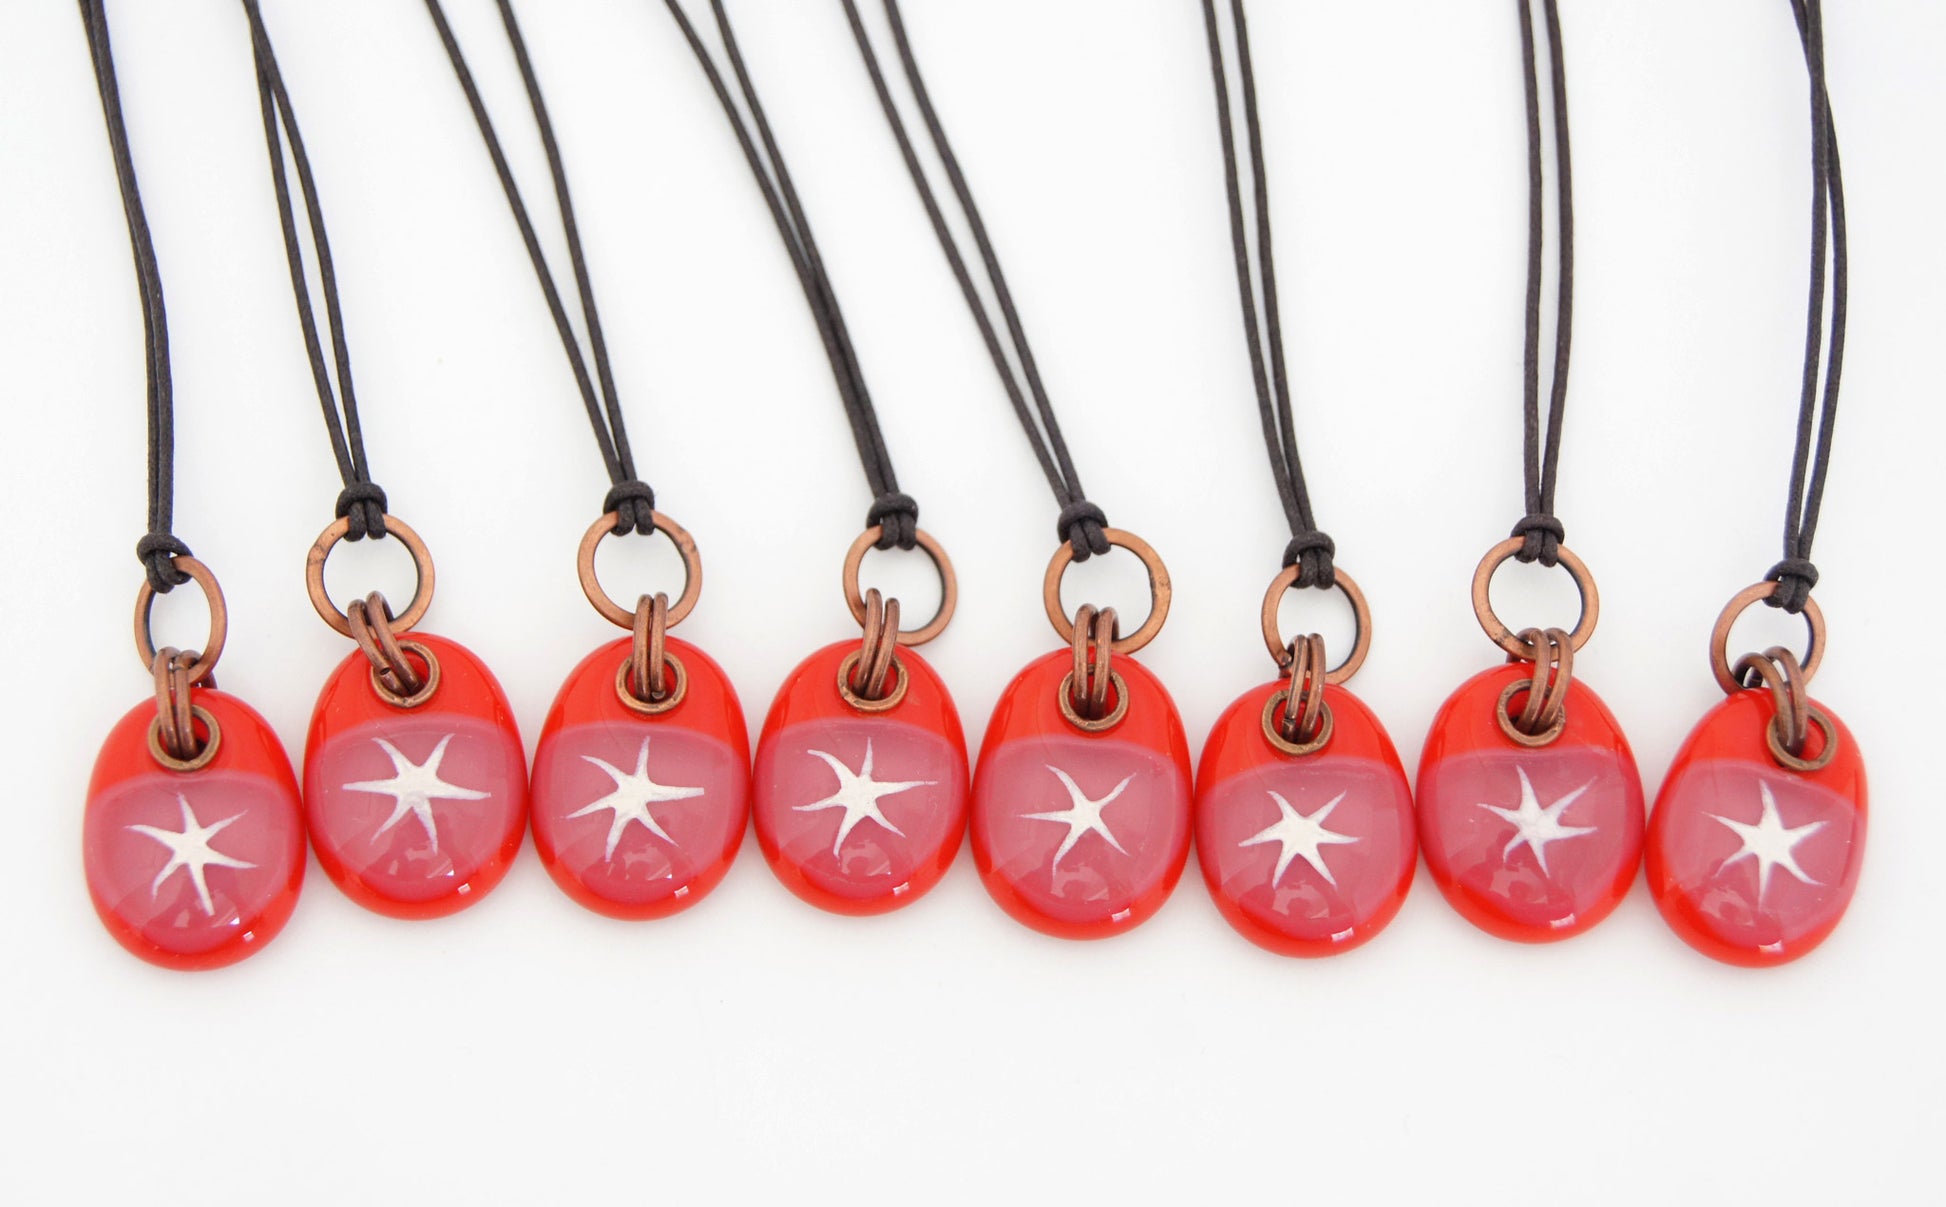 Handmade painted star pendants on cotton cord. 